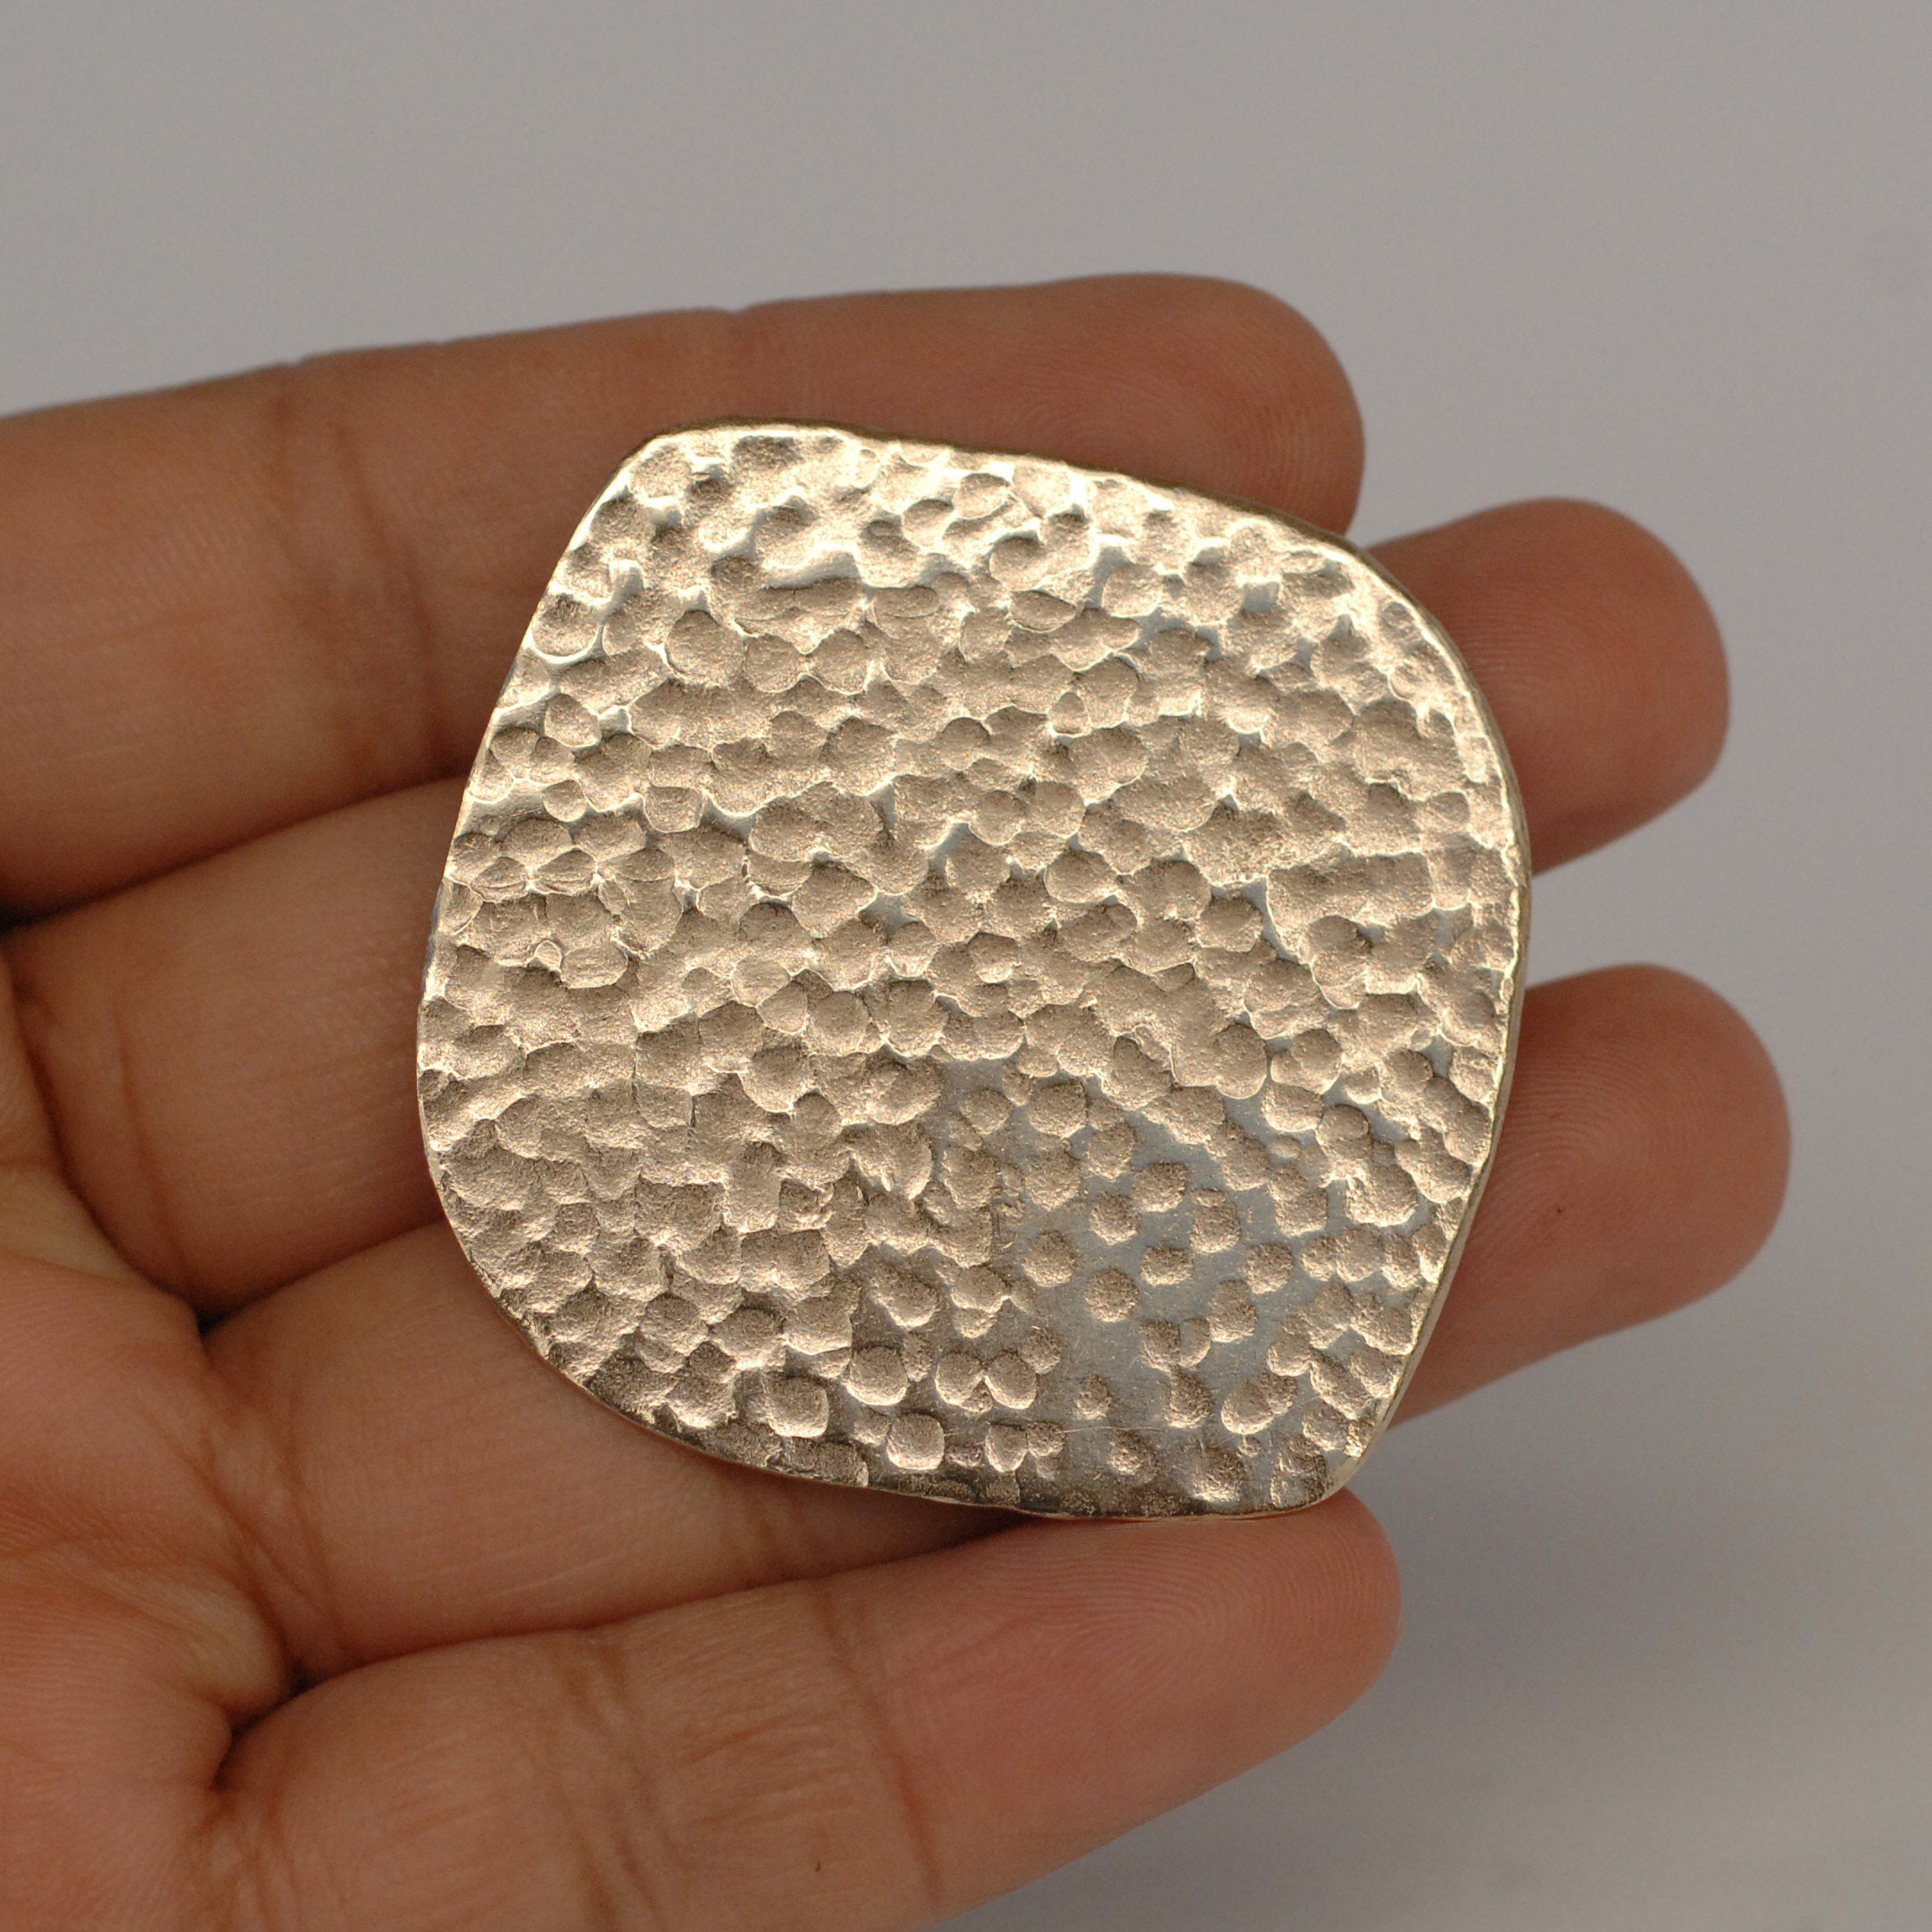 Organic freeform wide diamond shapes - hammered metal blanks German silver